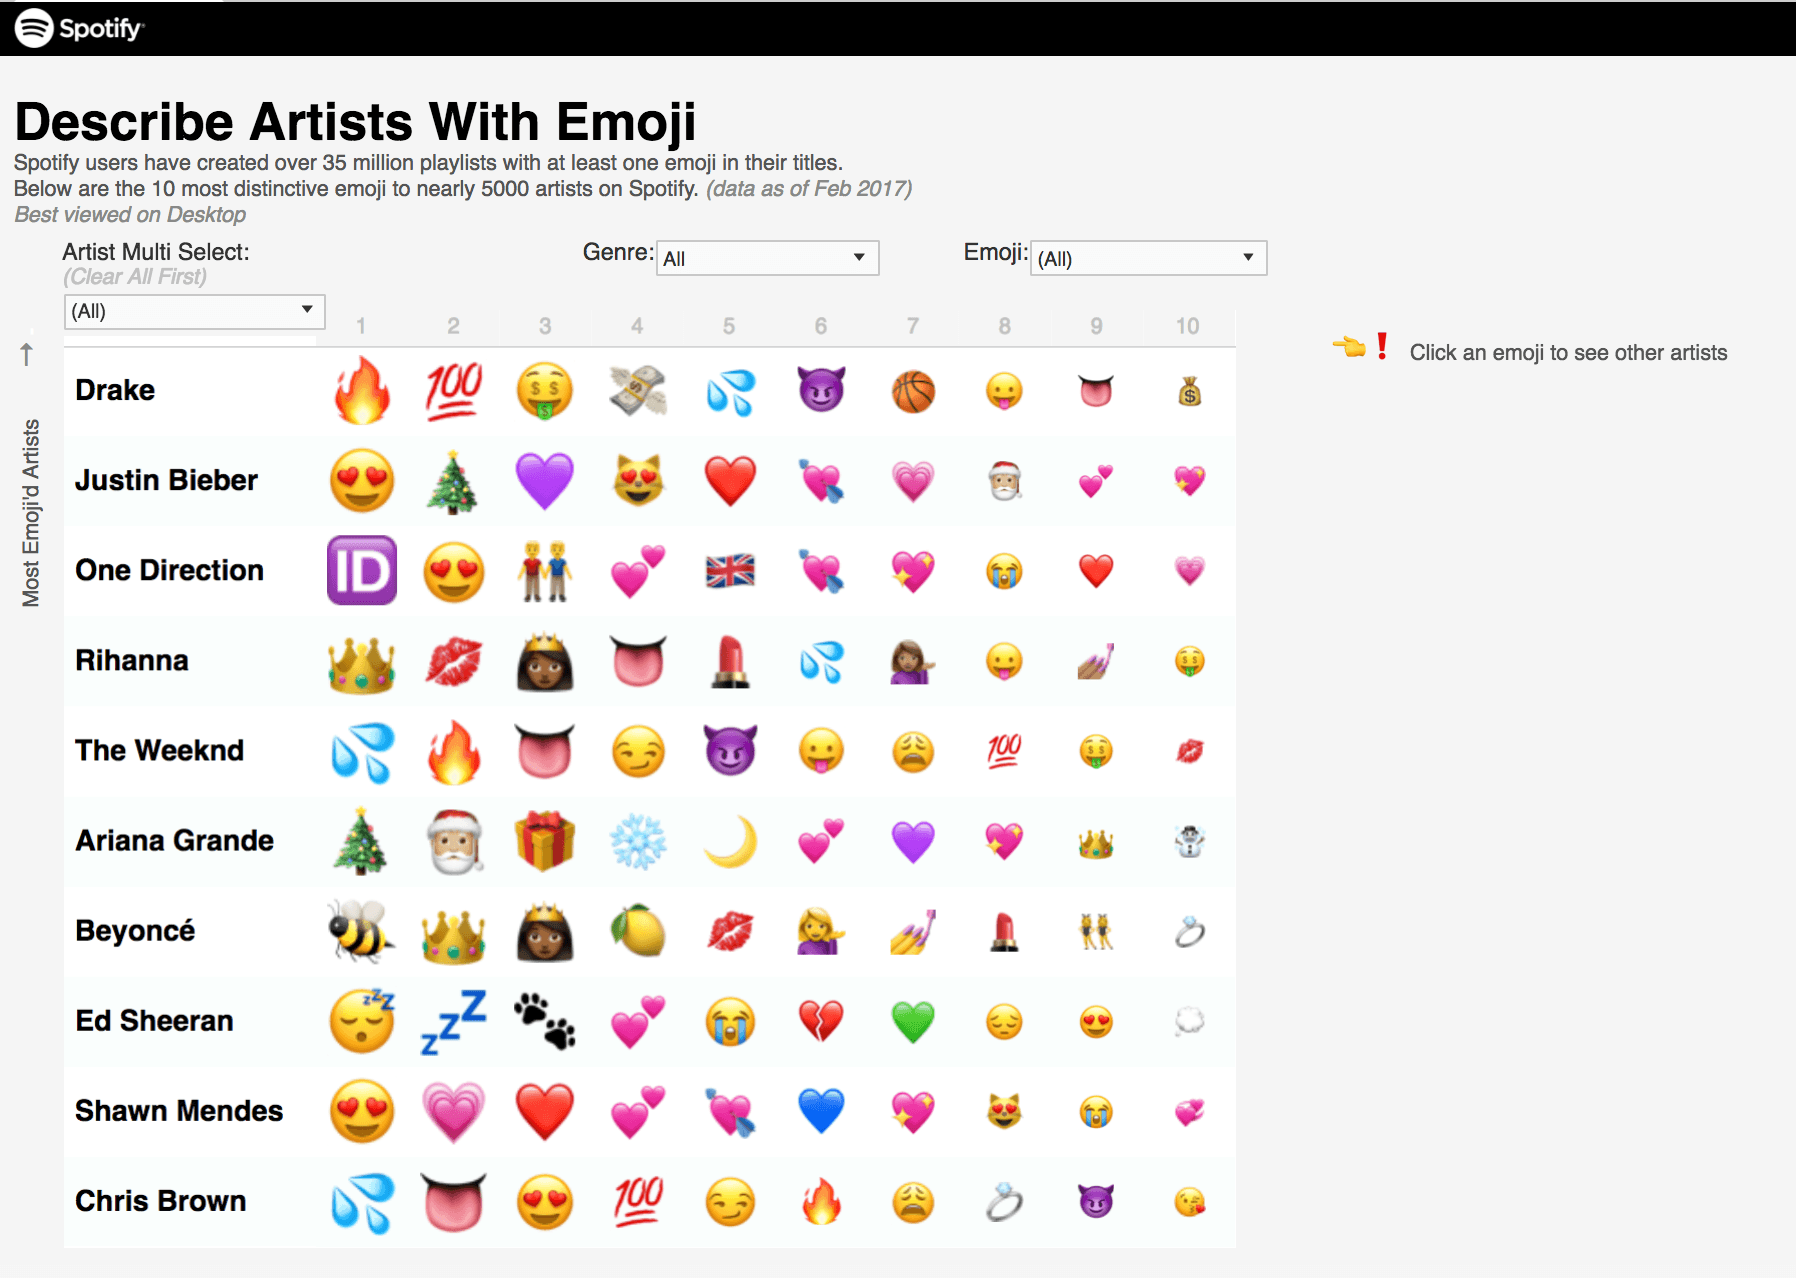 Workbook The Emoji Of Spotify Artists